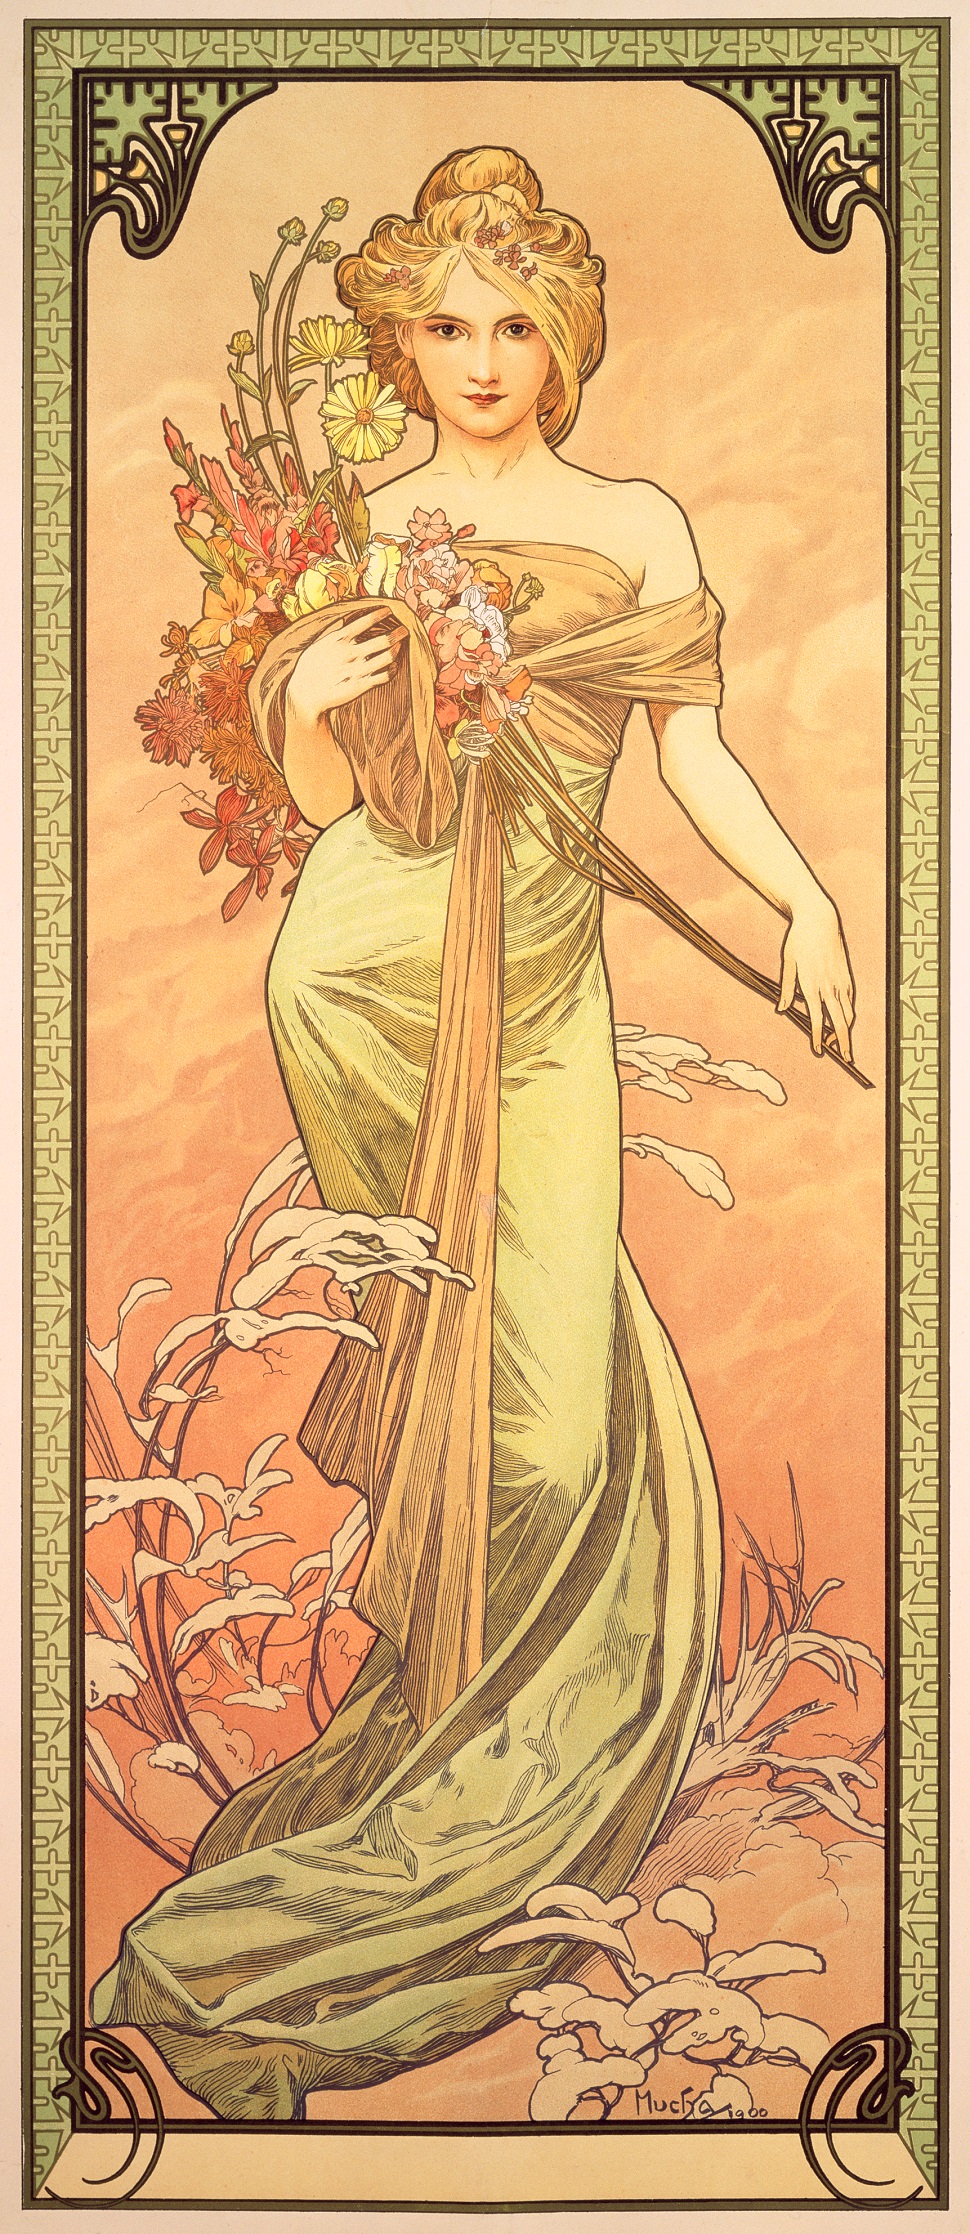 Alphonse Mucha, The Seasons: Spring, 1900